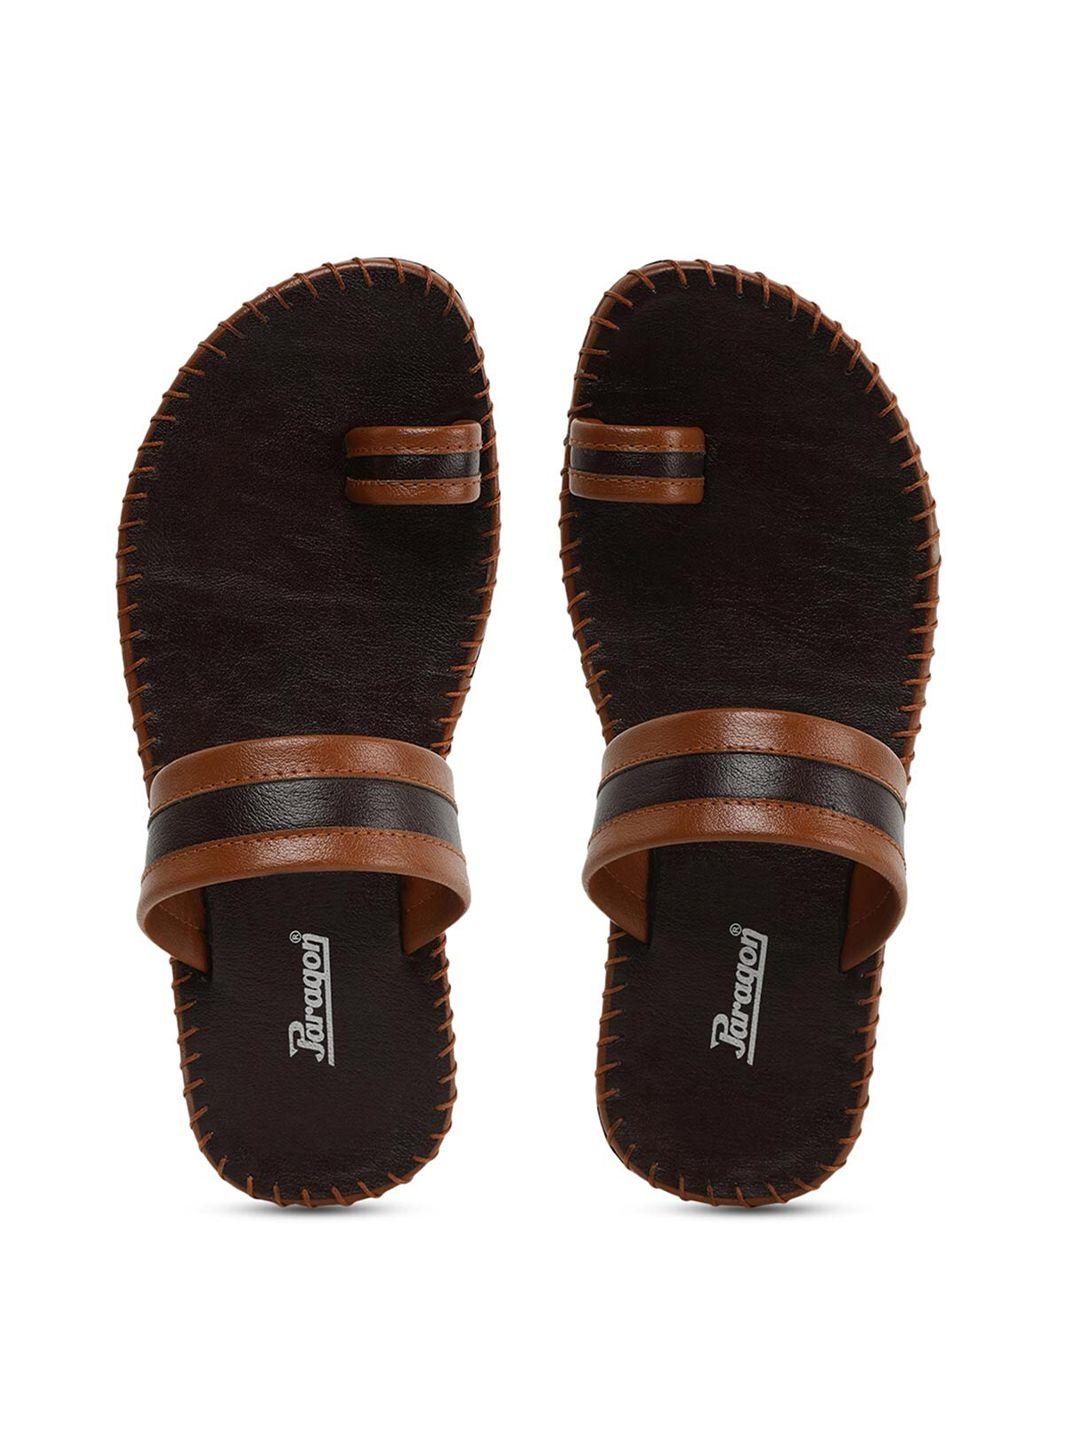 paragon men brown tan slip-on comfort sandals